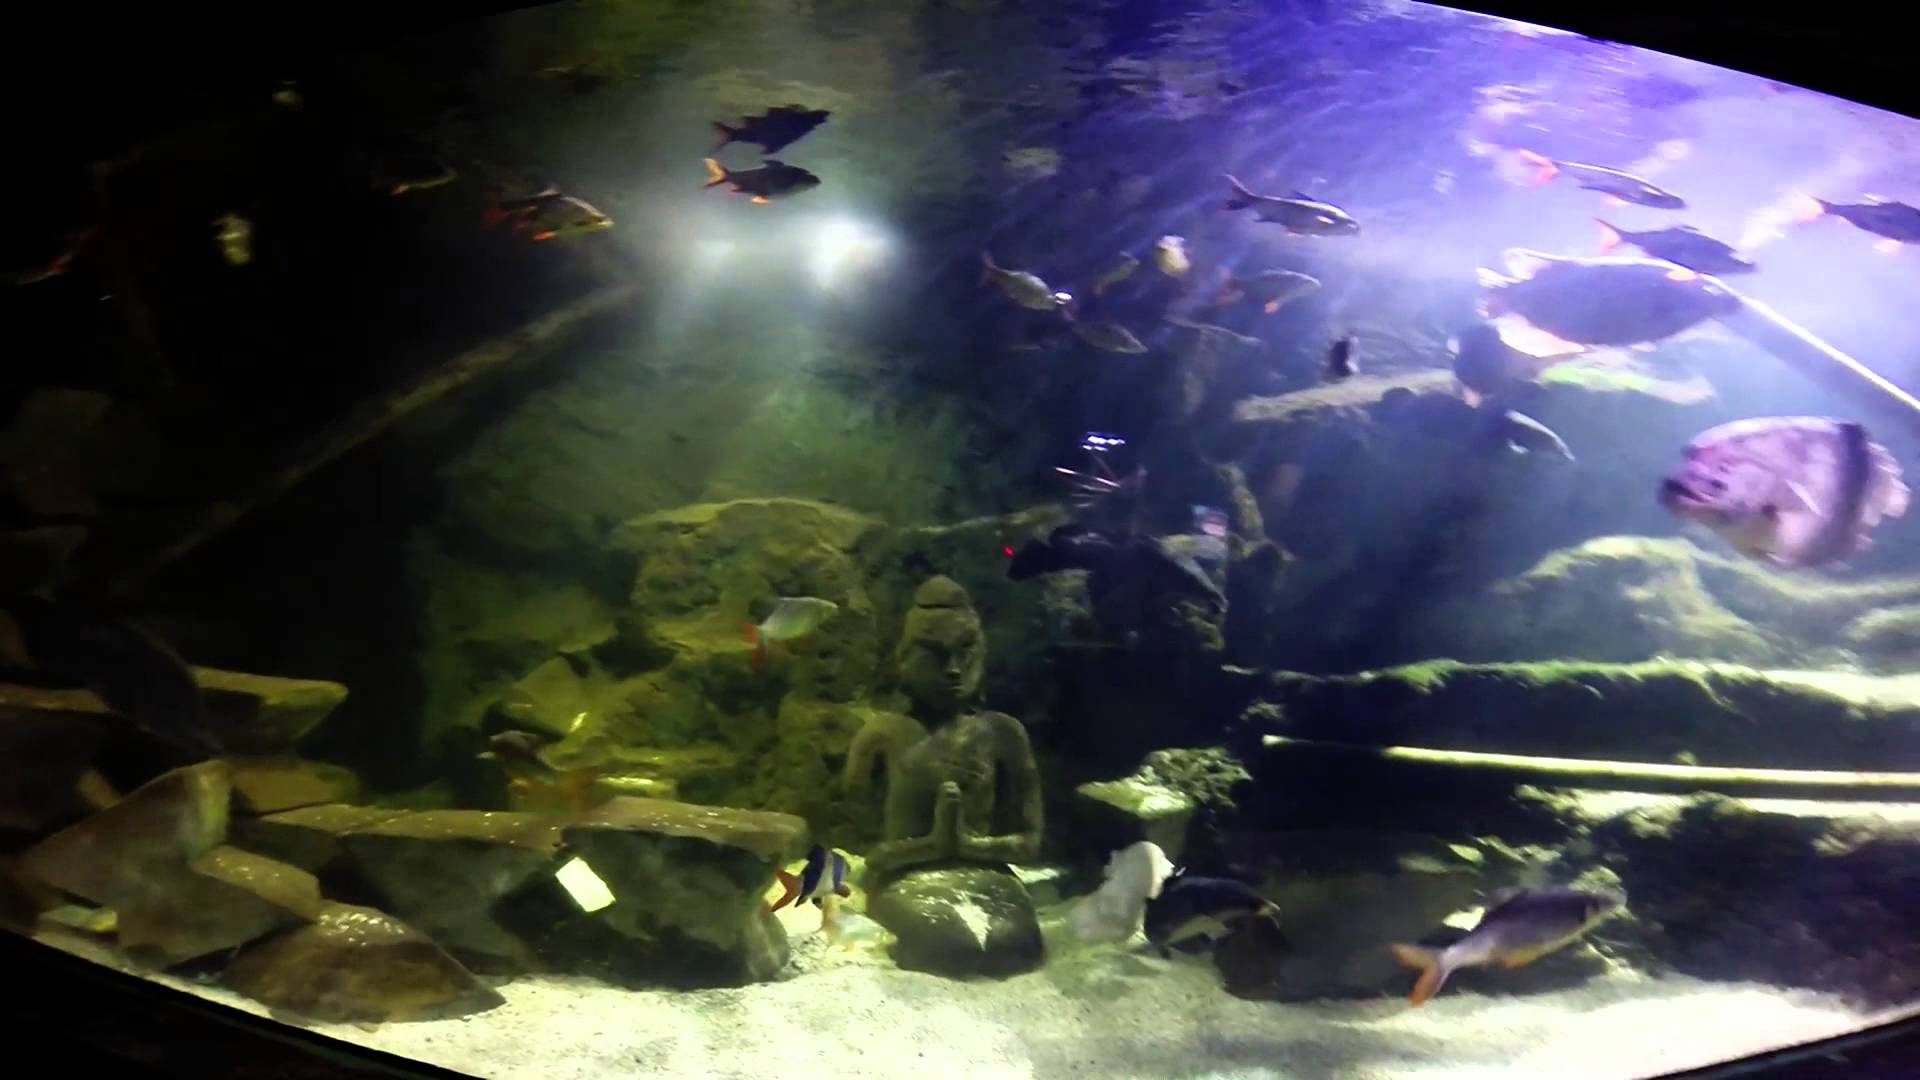 SEA LIFE London Aquarium /inside the water